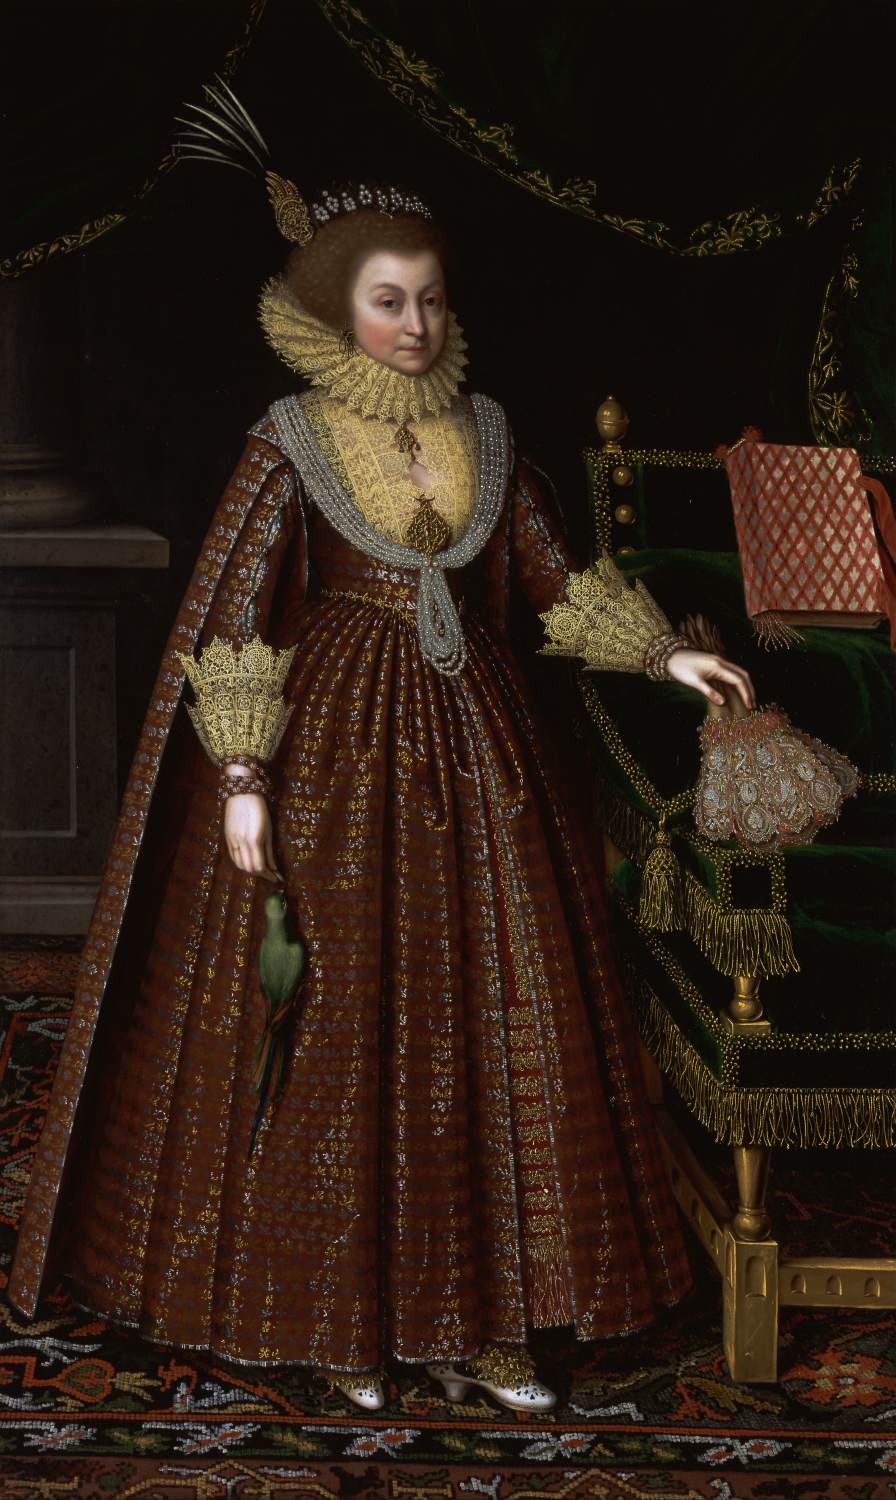 Elizabeth Pierrepont, Countess of Kellie